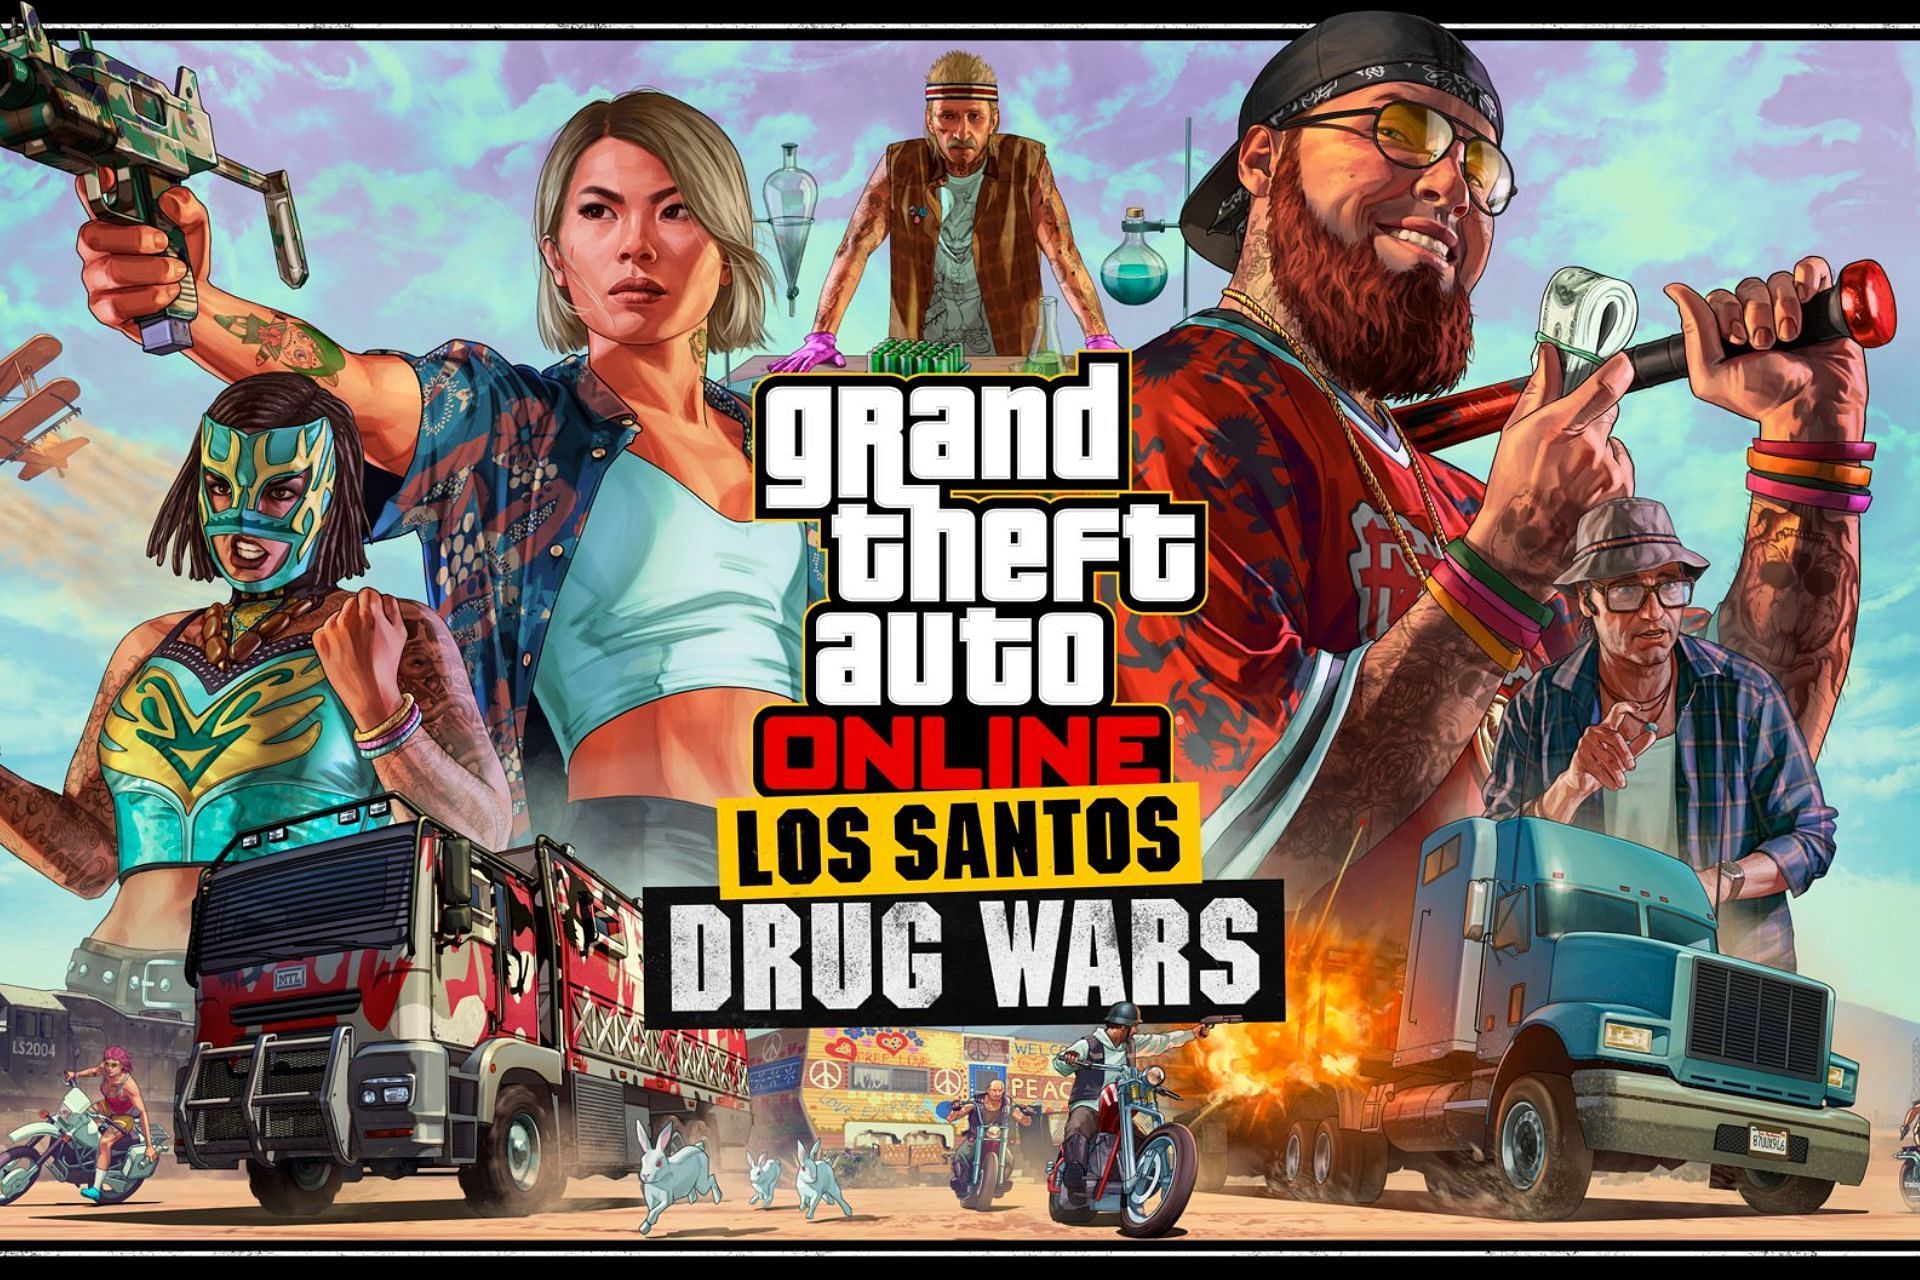 All details about the Los Santos Drug Wars in GTA Online (Image via Rockstar Games)